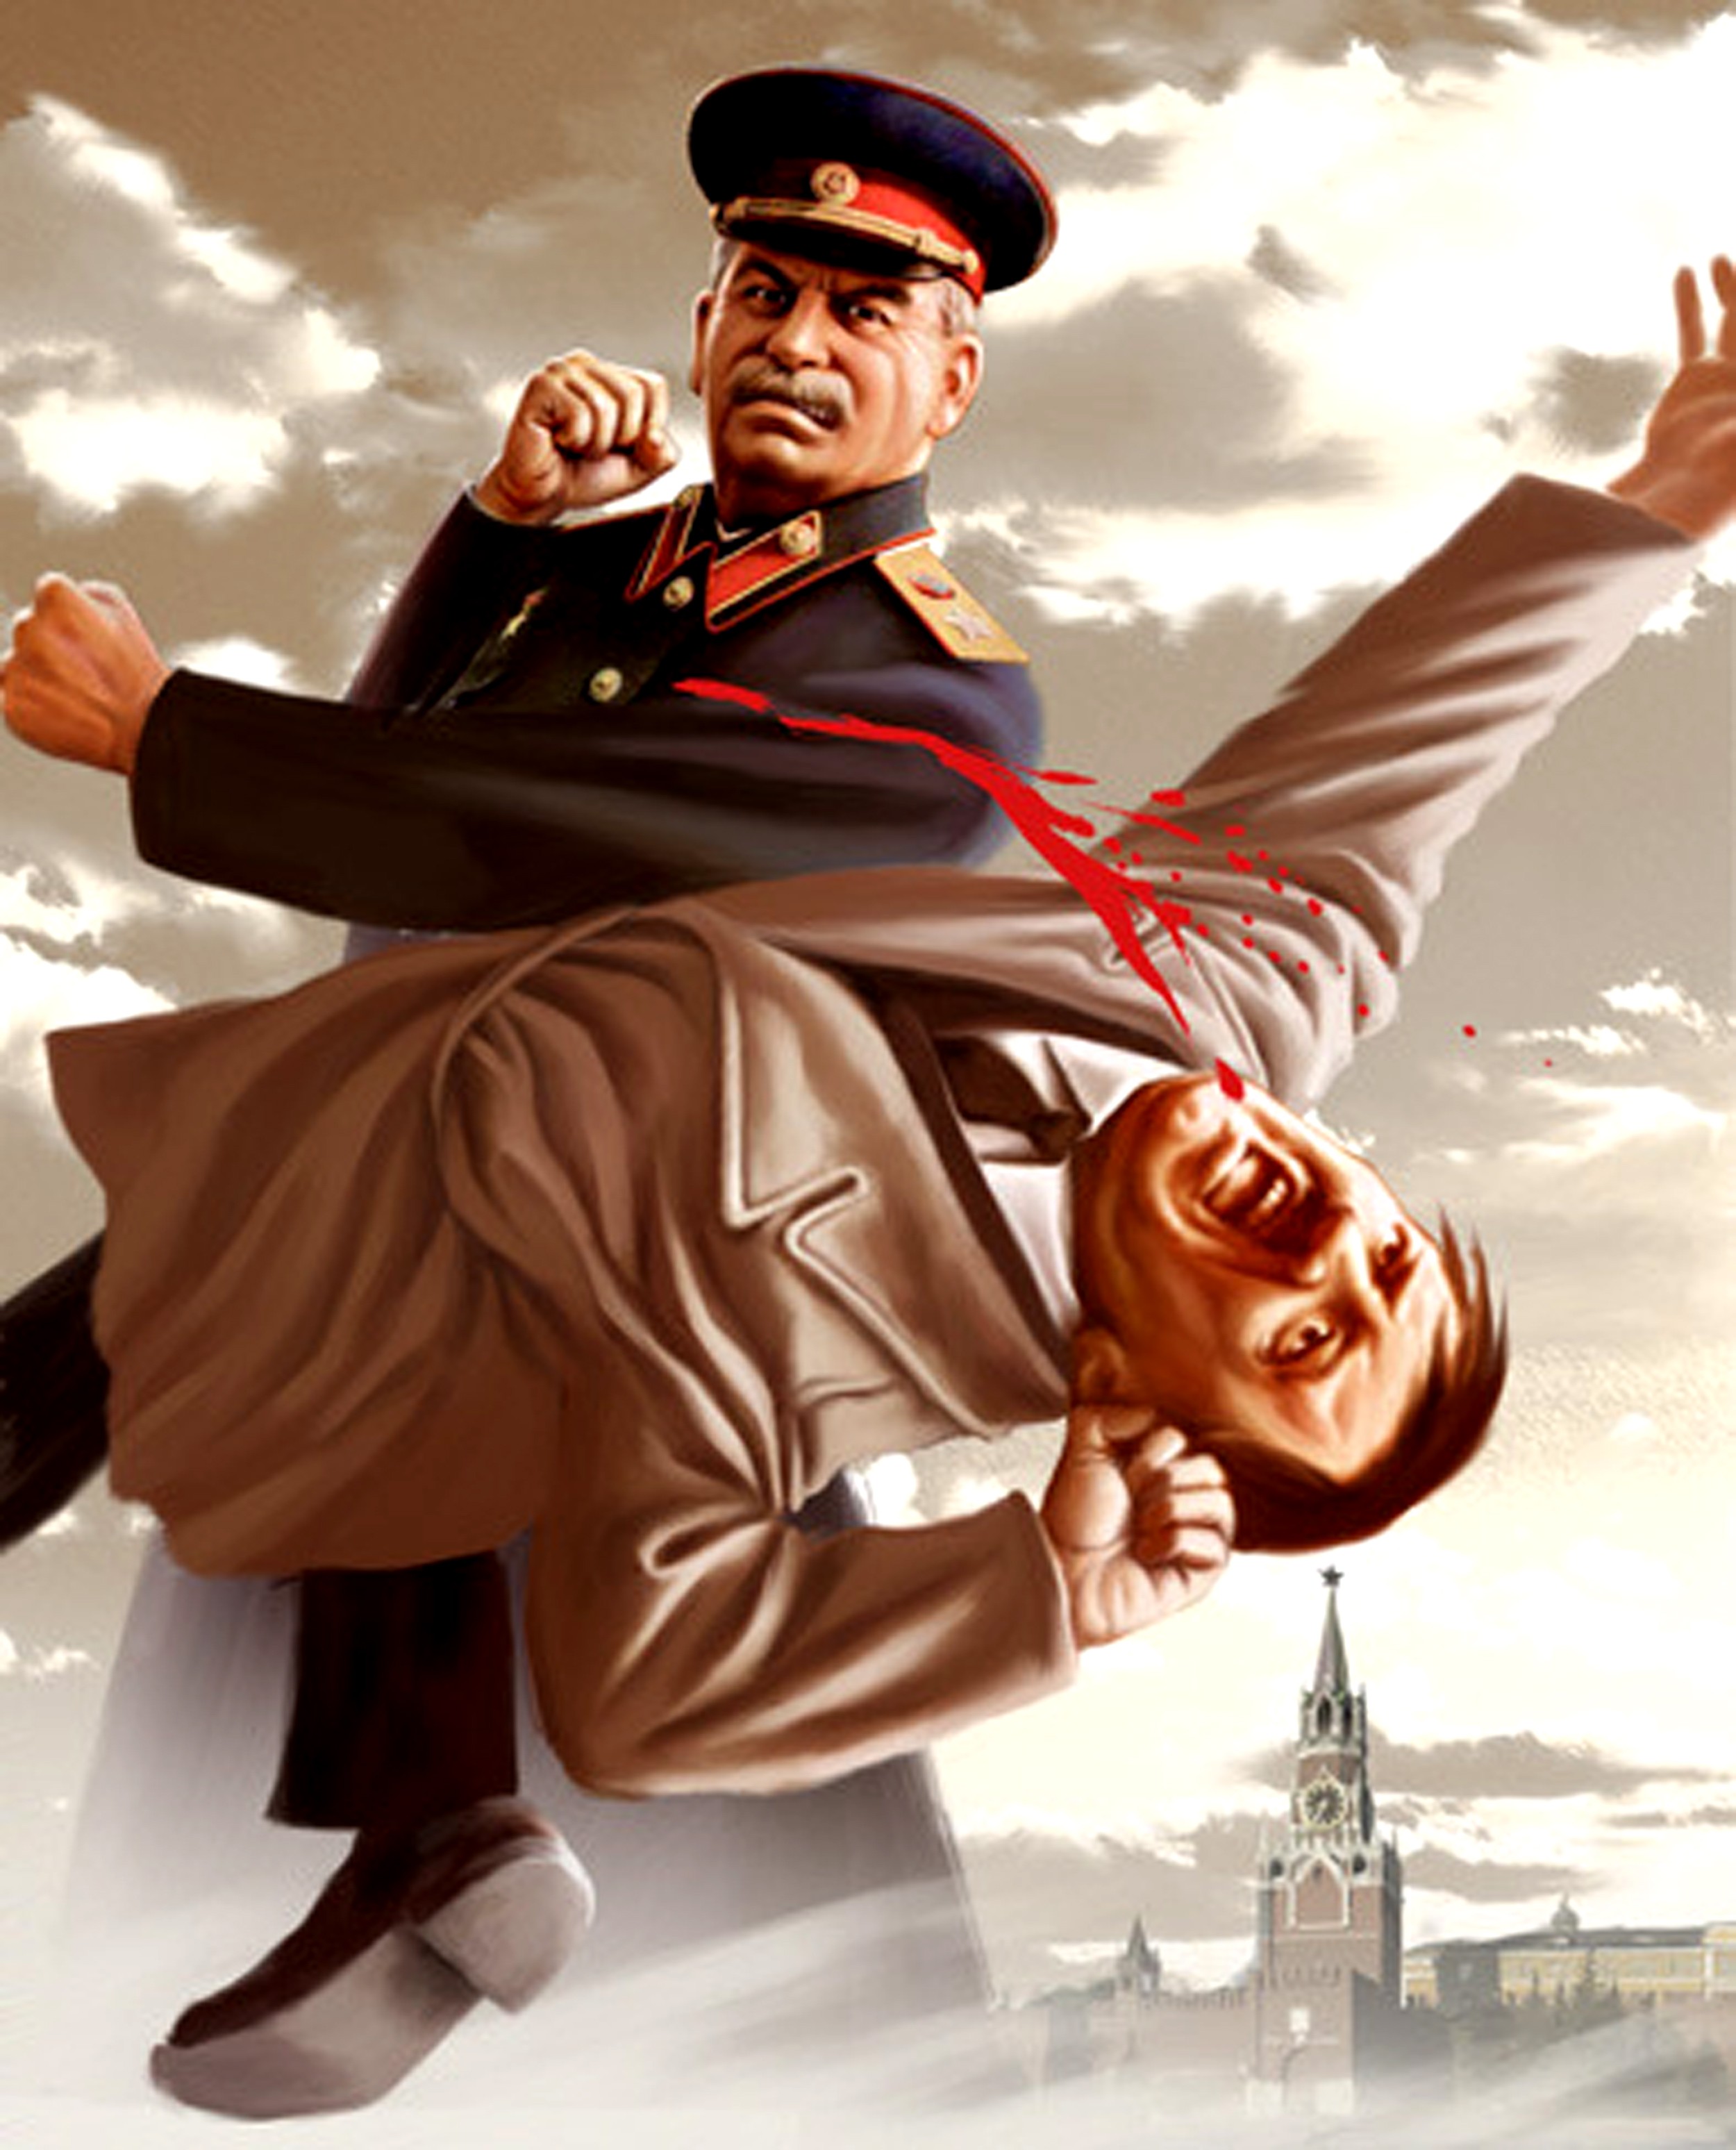 Stalin Hitler (#1176424) - HD Wallpaper & Backgrounds Download